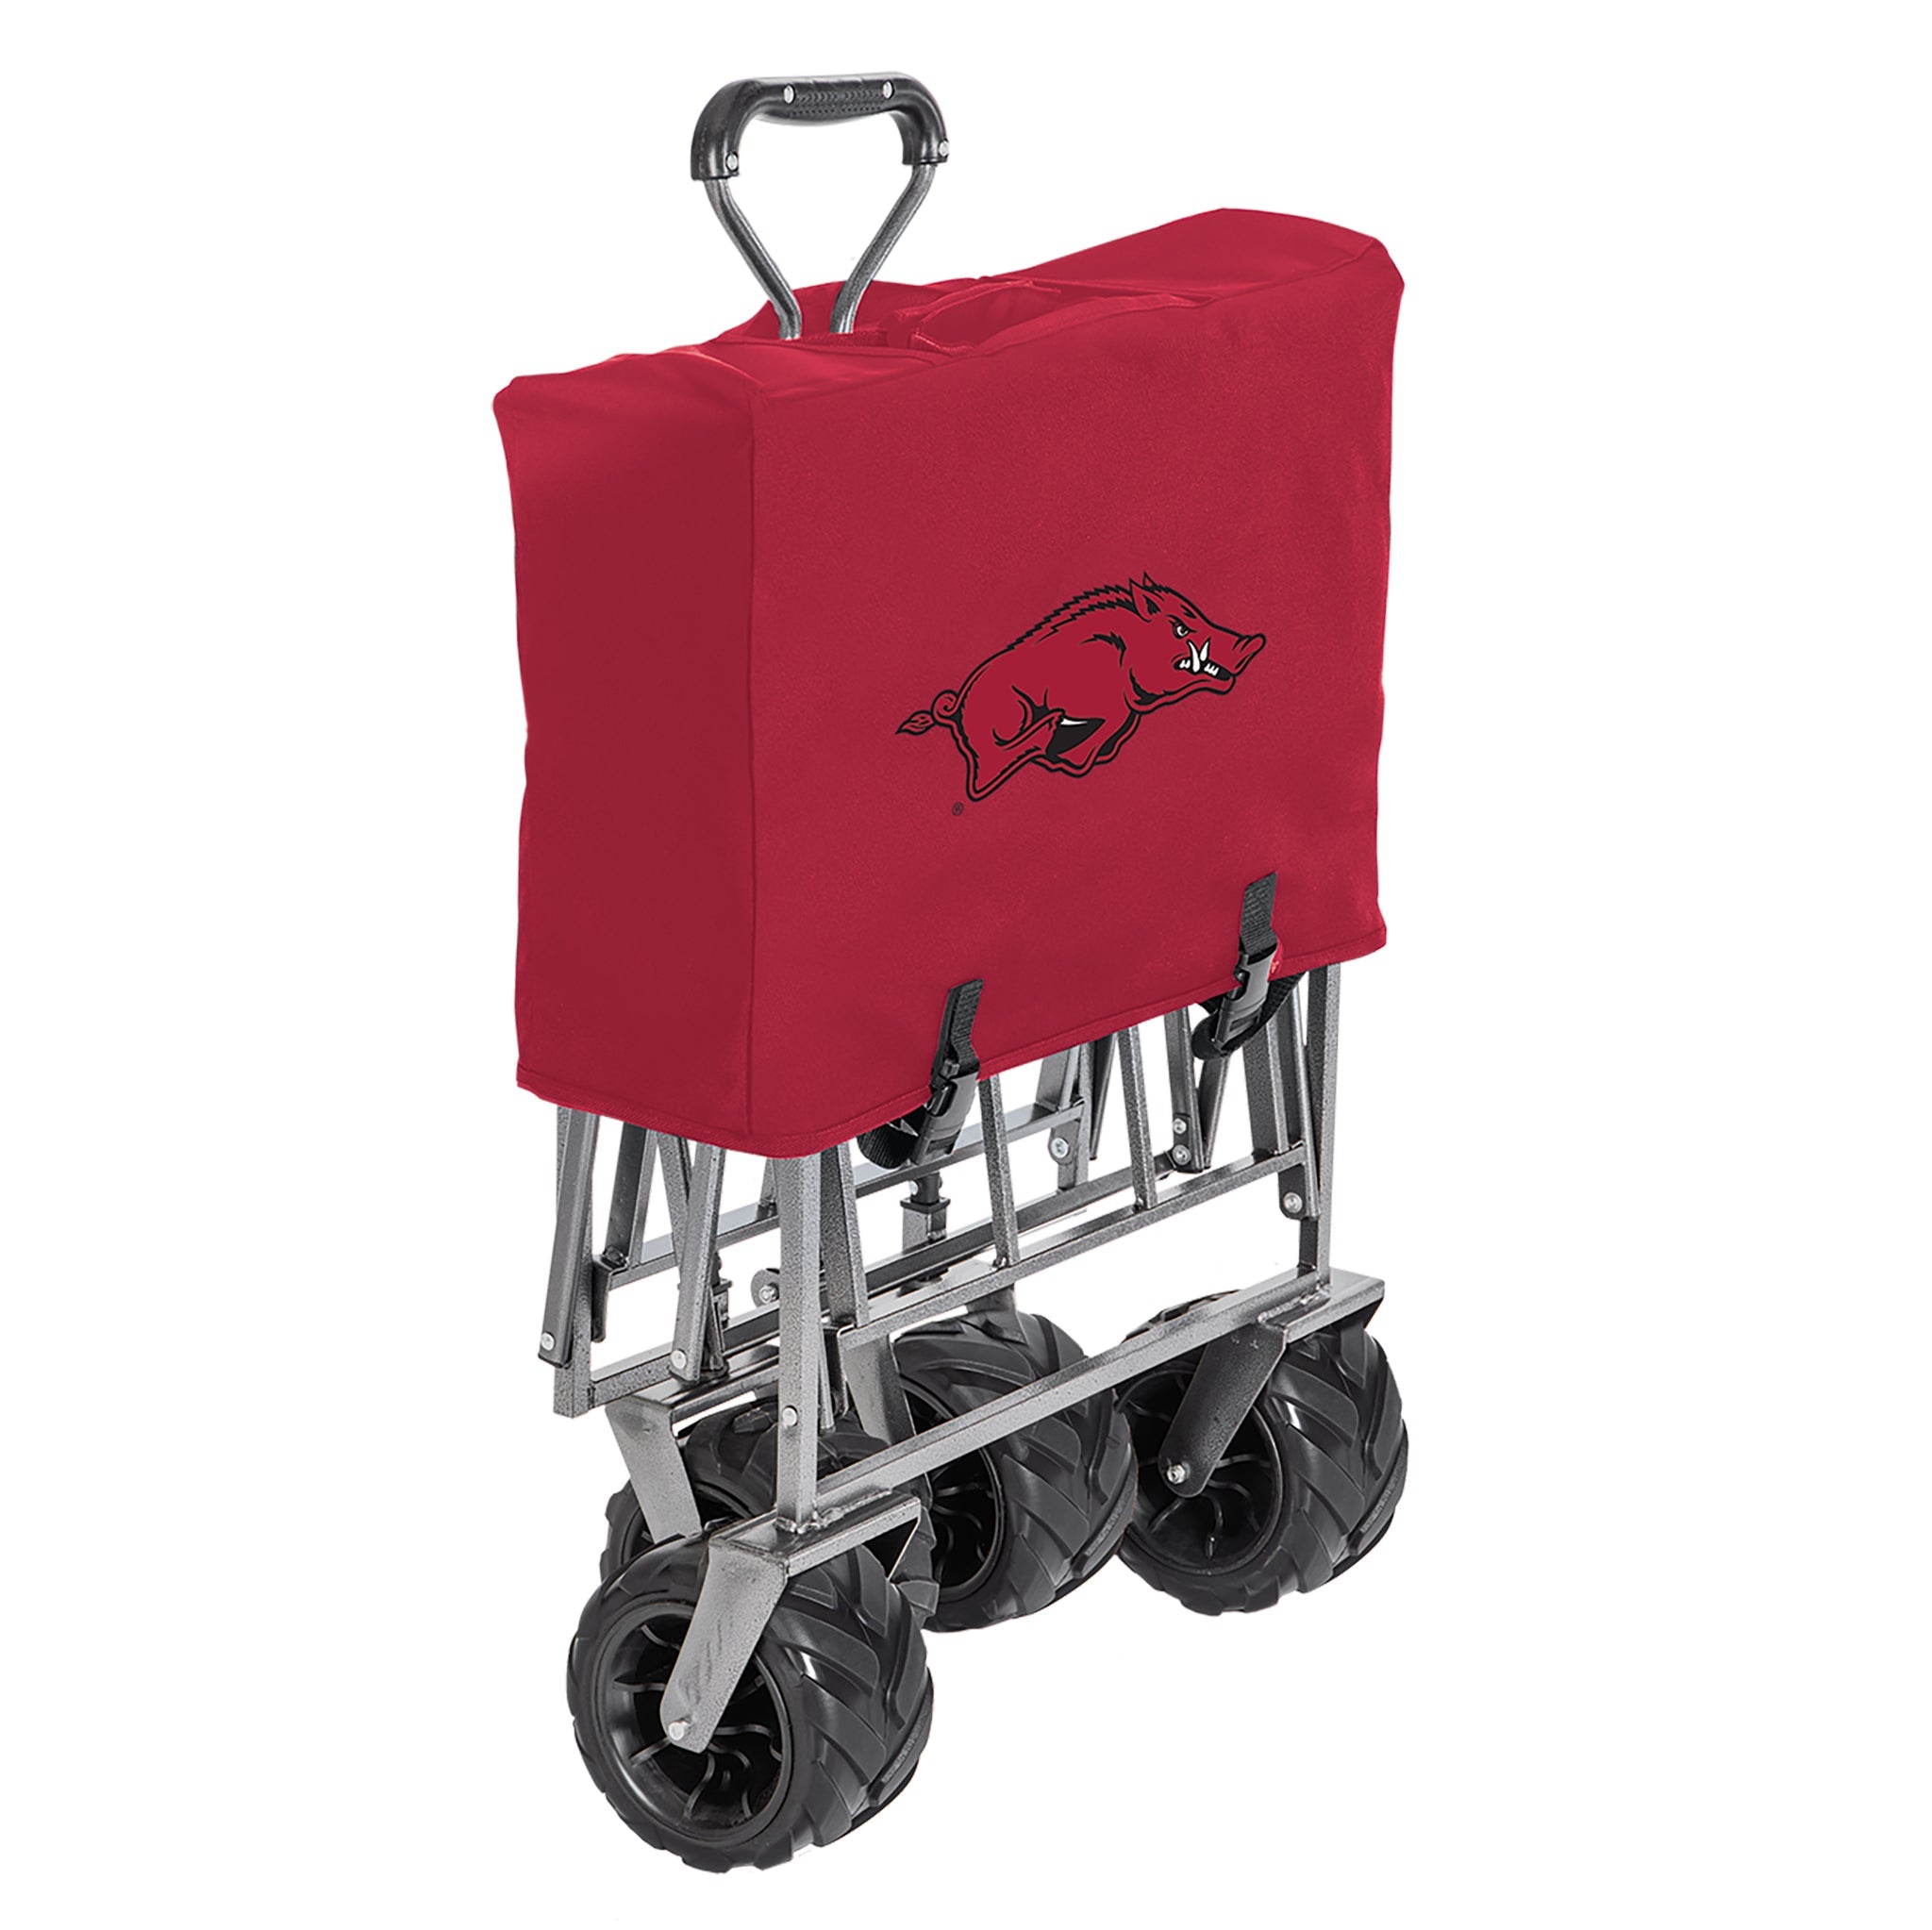 Collegiate Heavy-Duty Utility Collapsible Sports Wagon - Smart Design® 36